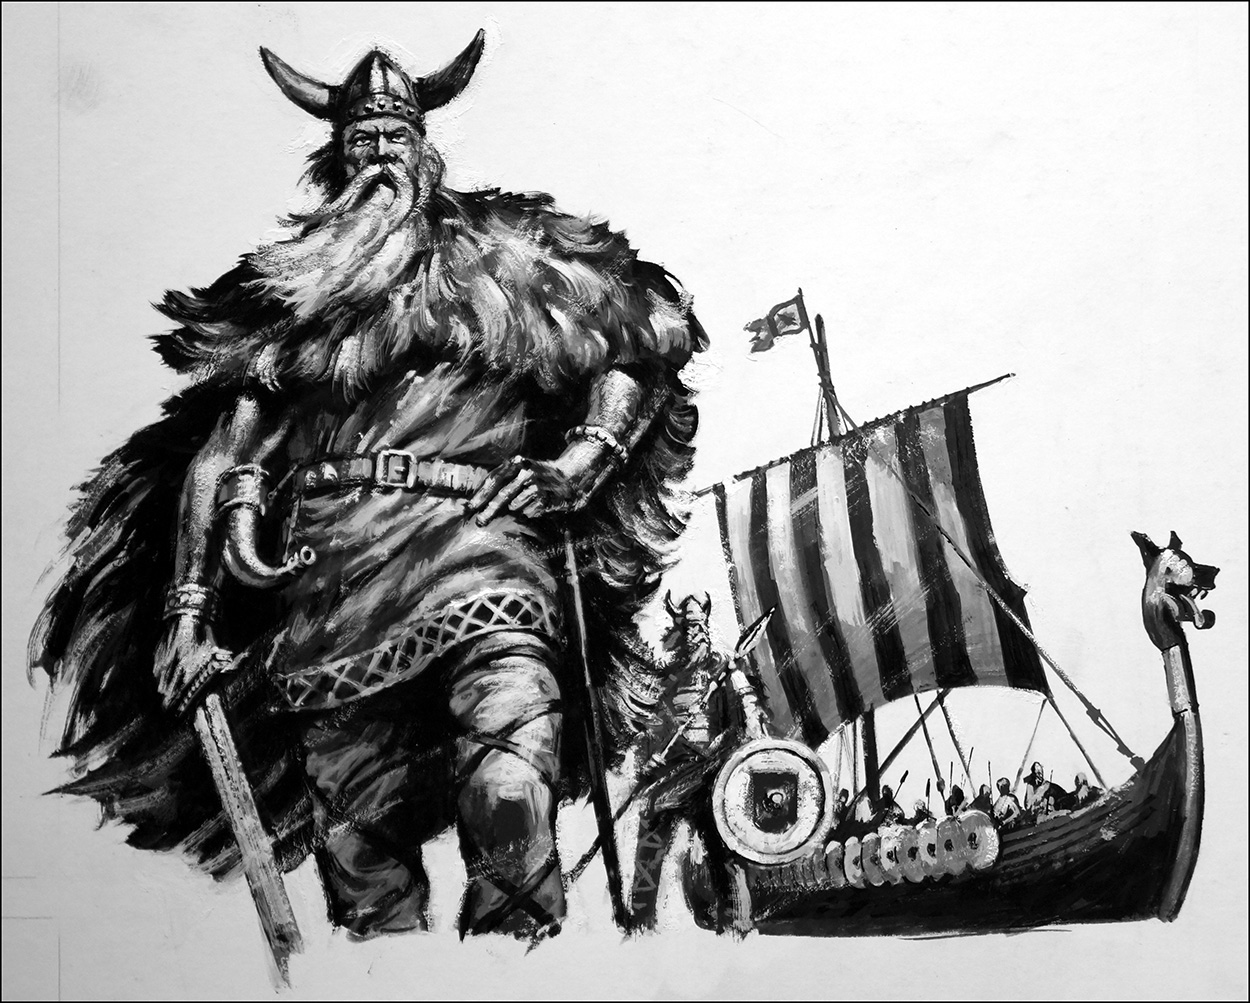 The Vikings (Original) art by Harry Green Art at The Illustration Art Gallery